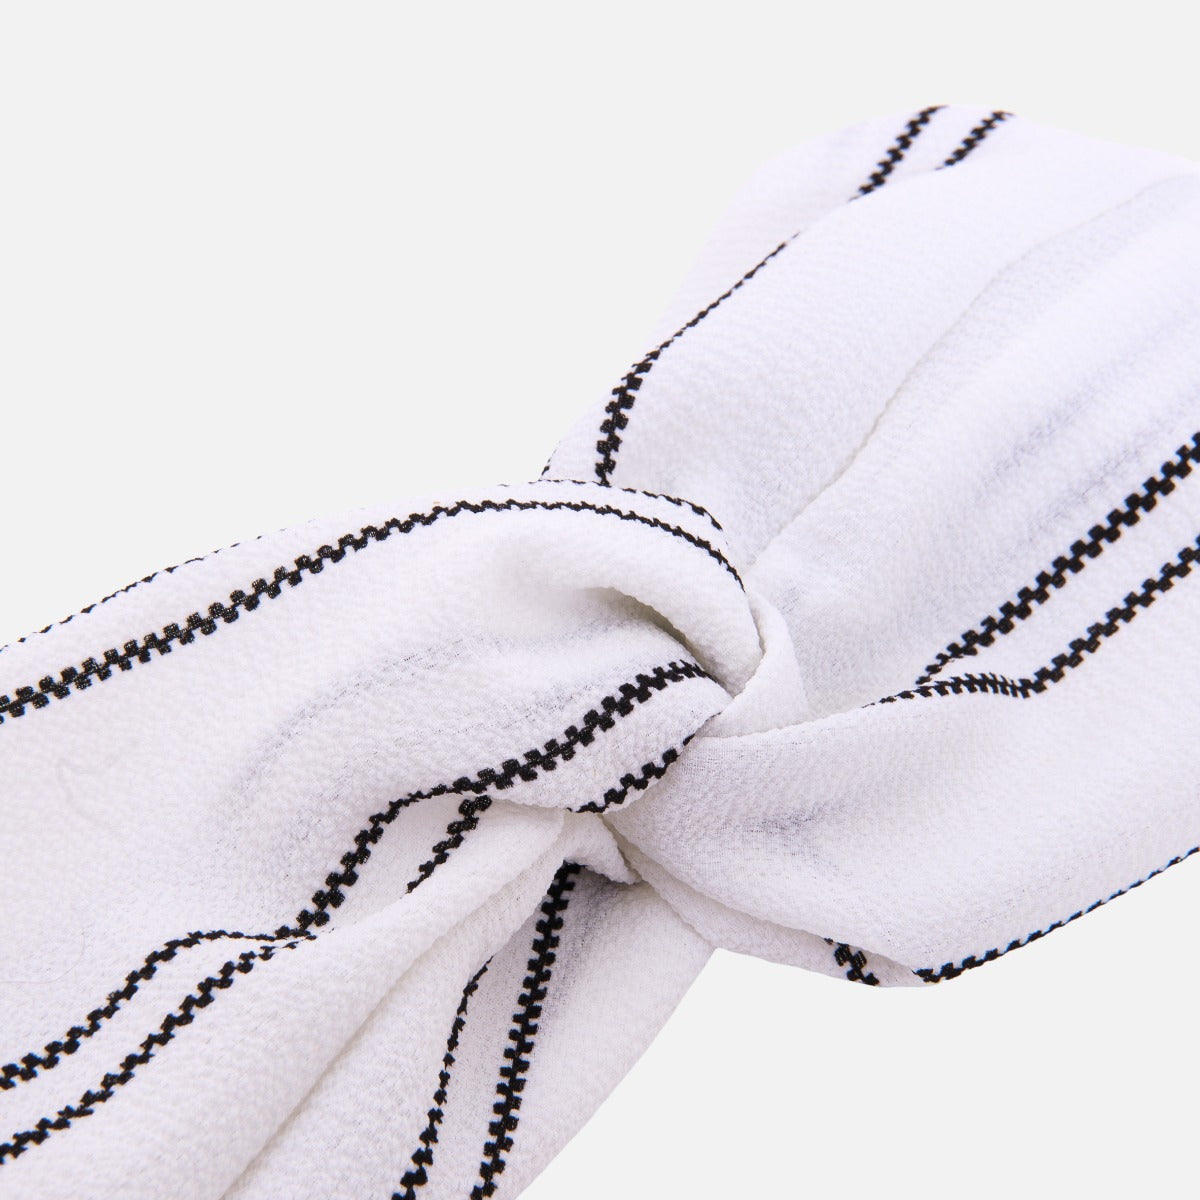 White headband with navy stripes